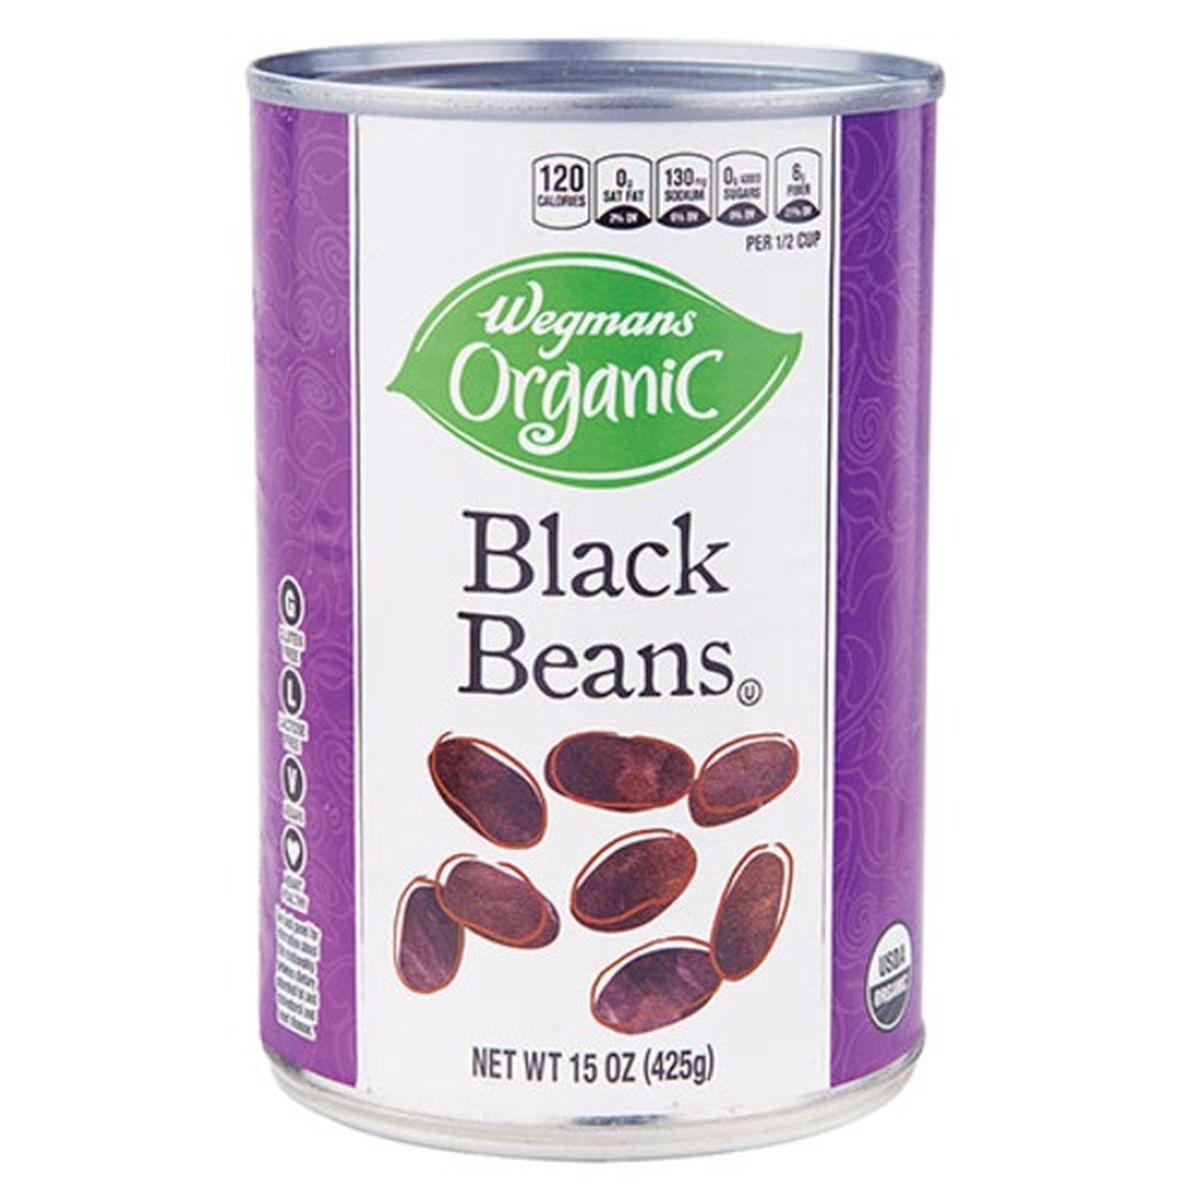 Calories in Wegmans Organic Black Beans